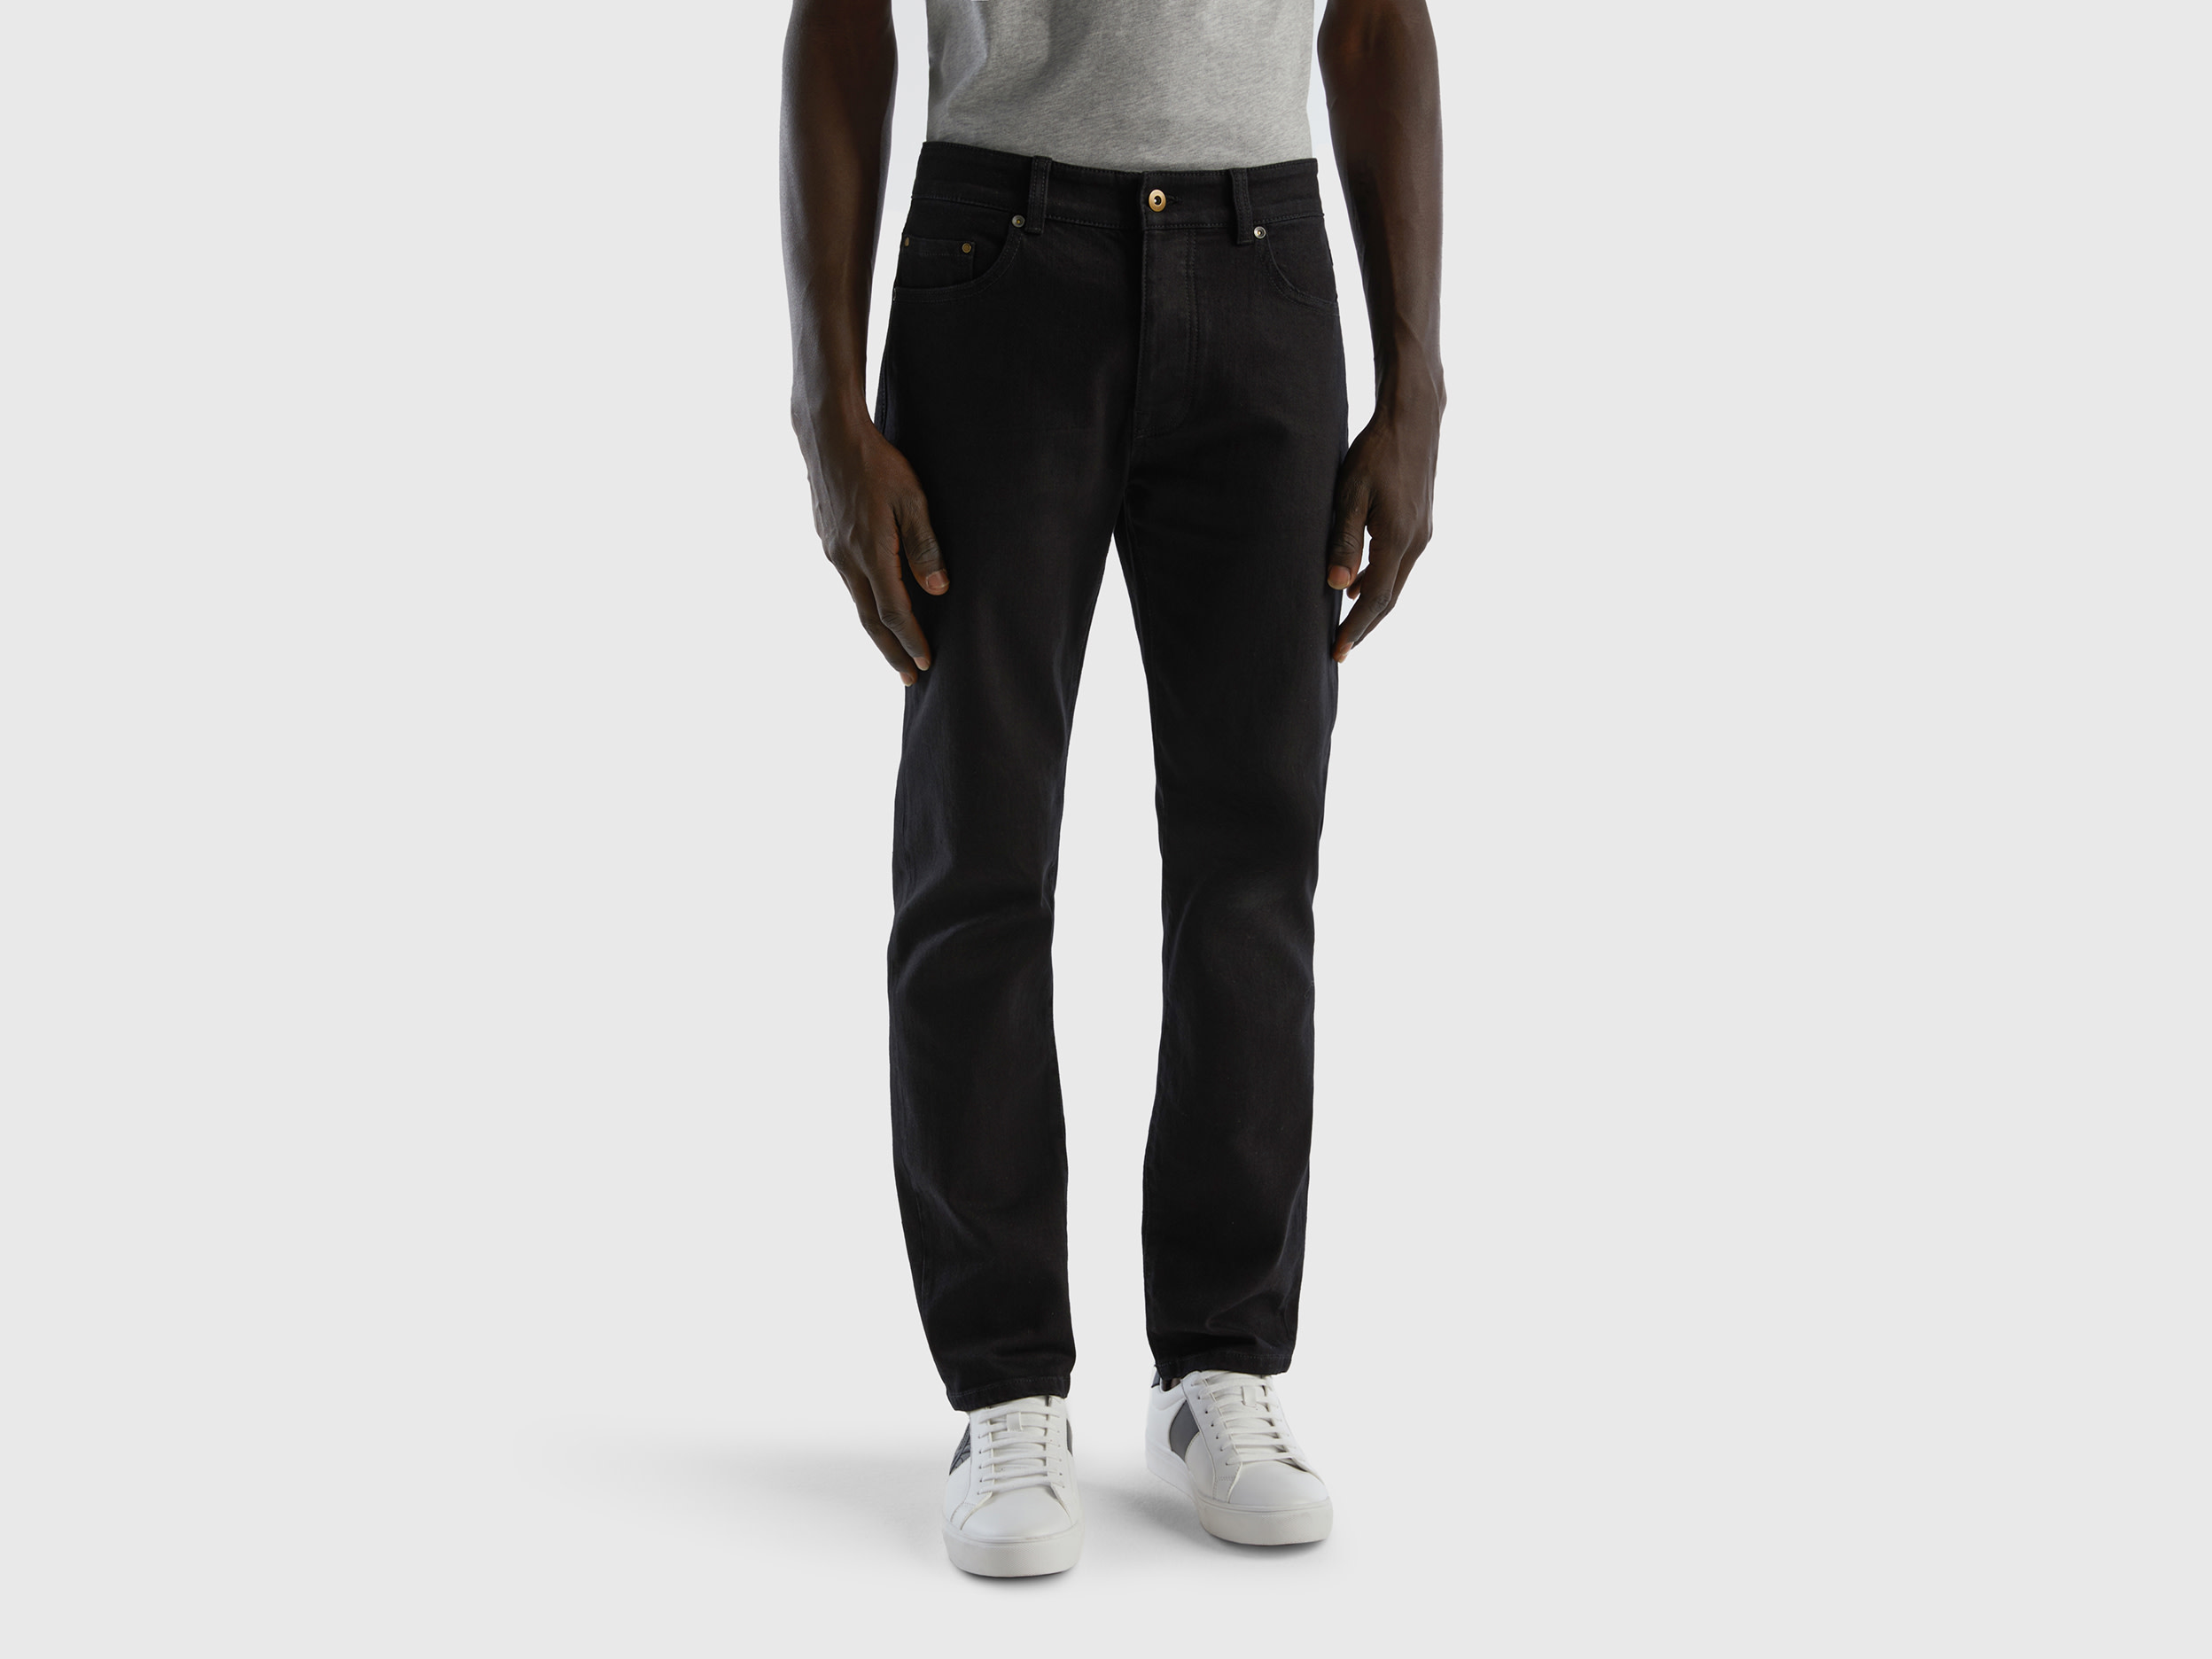 Benetton, Five Pocket Slim Fit Jeans, size 36, Black, Men